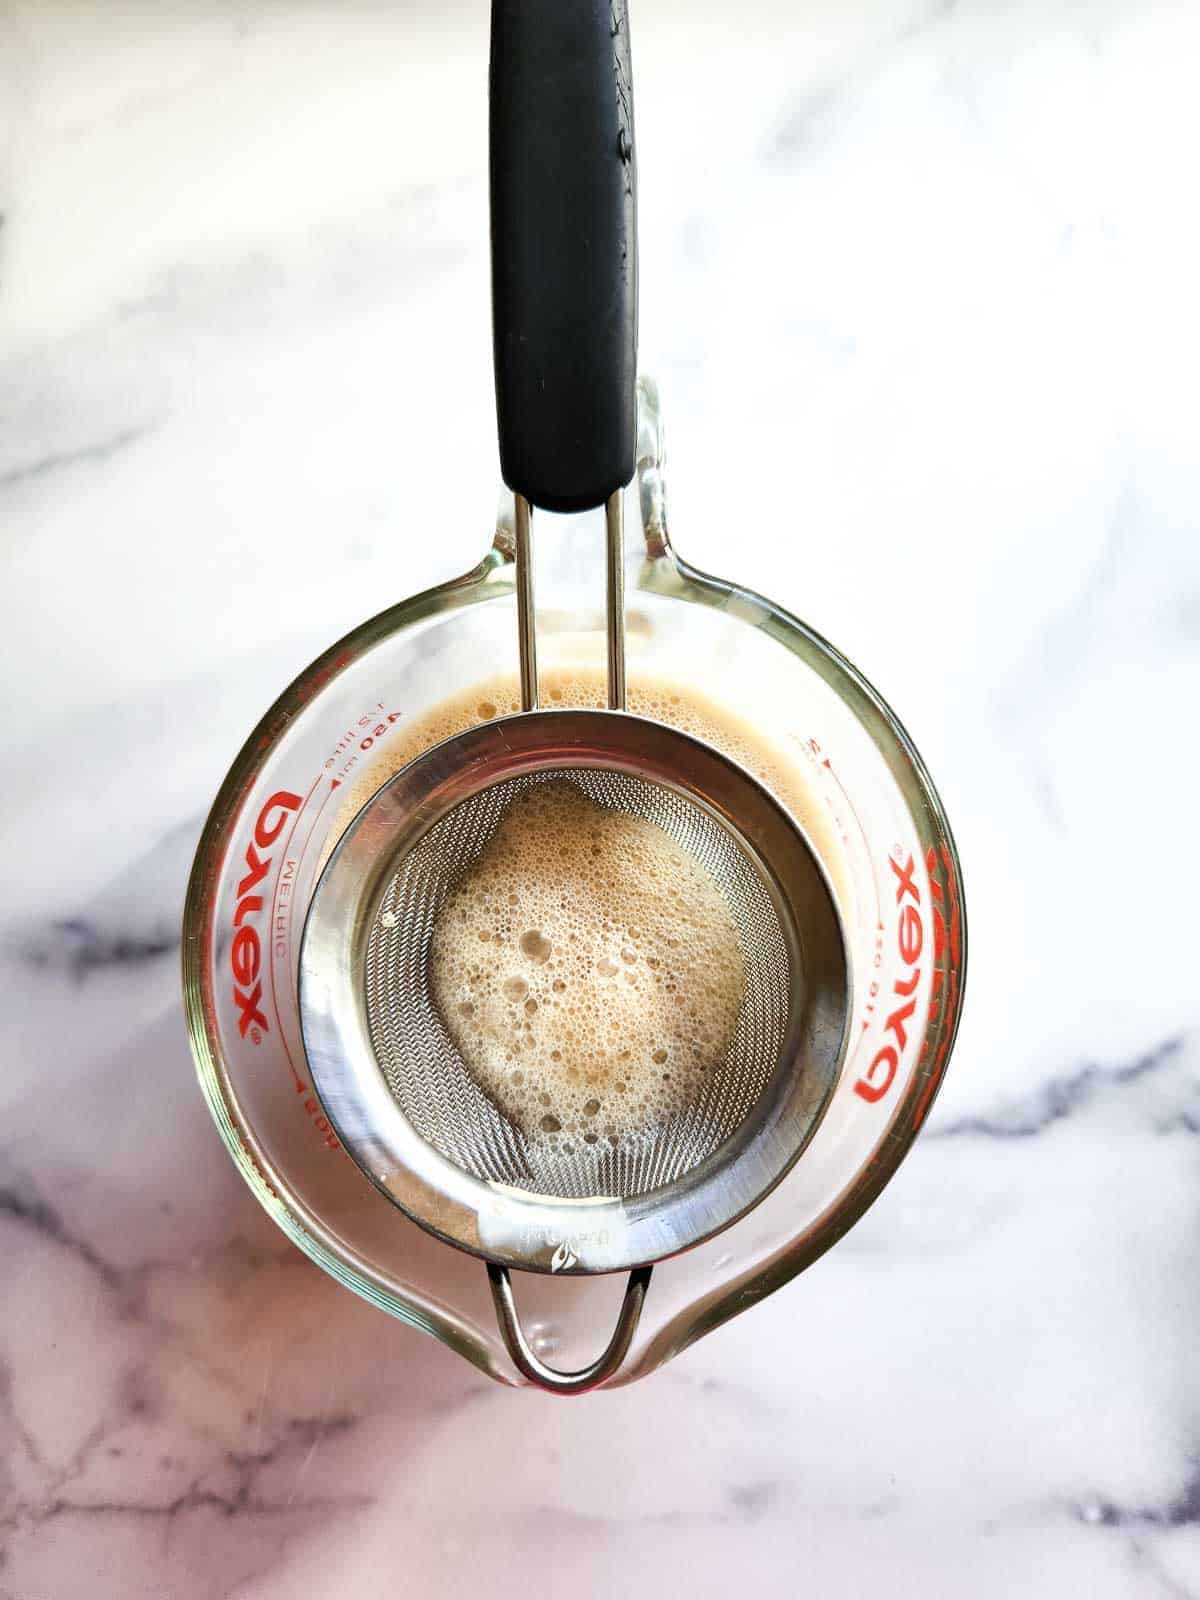 Straining espresso panna cotta liquid into a cup.